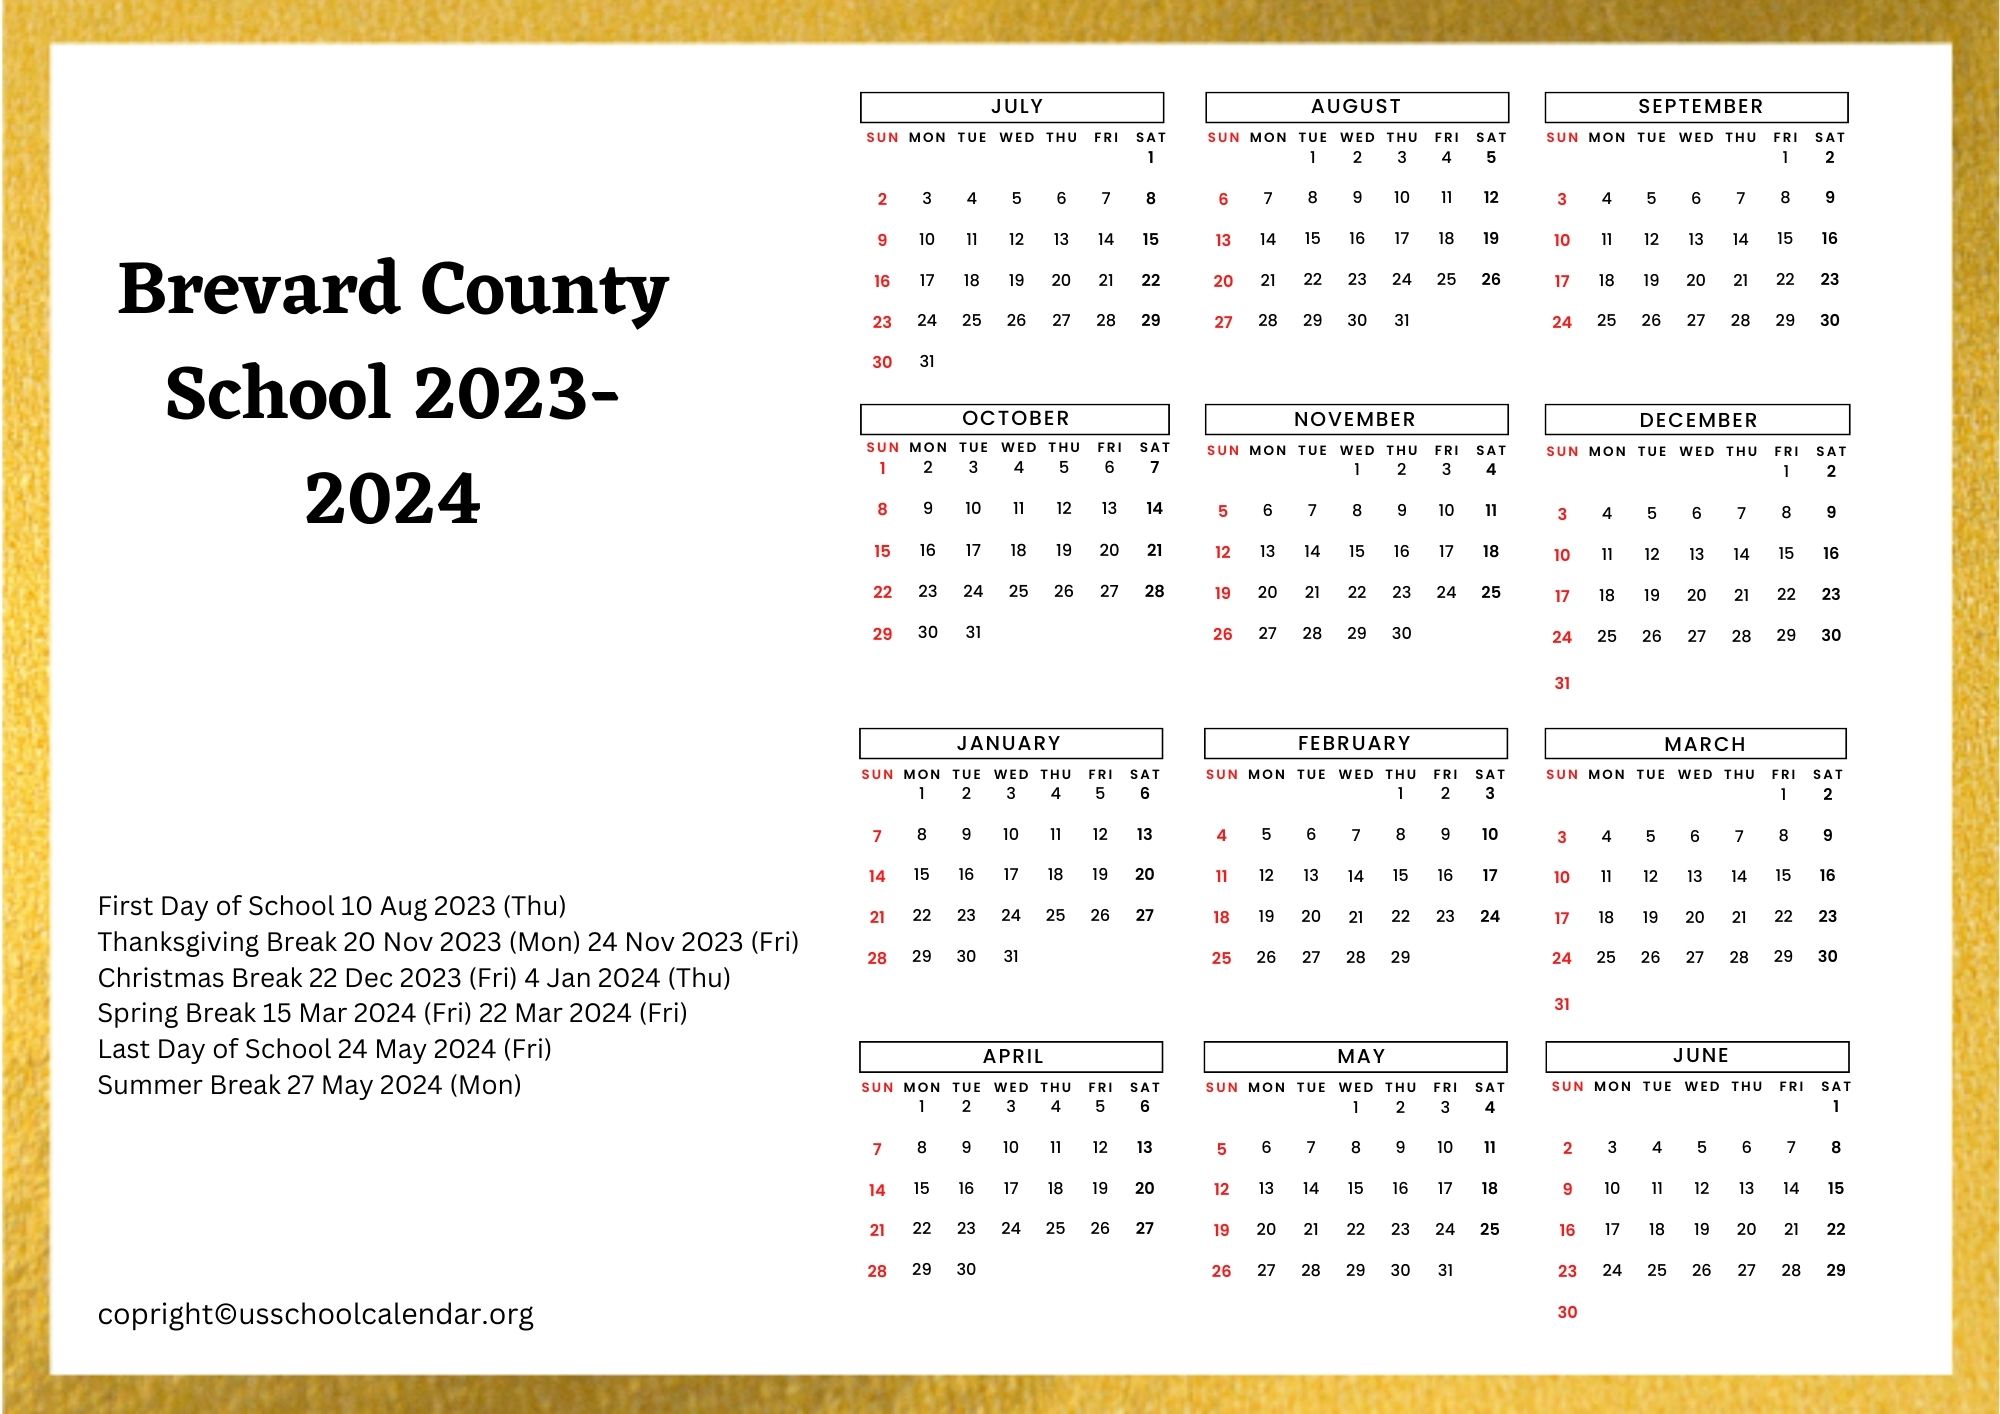 brevard-county-school-calendar-with-holidays-2023-2024